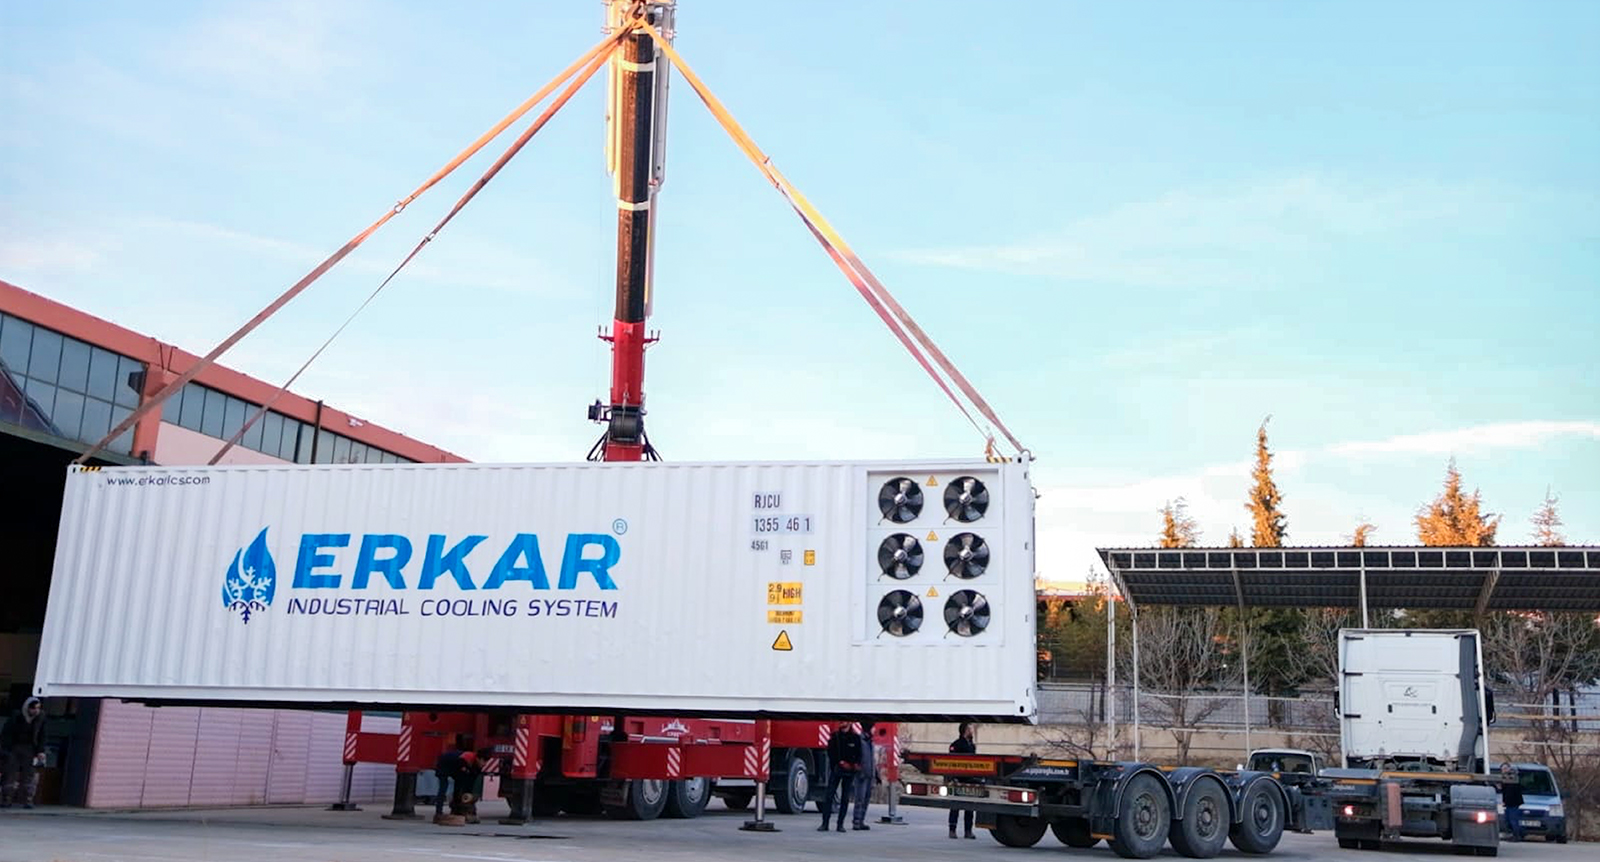 Erkar Mobil Container